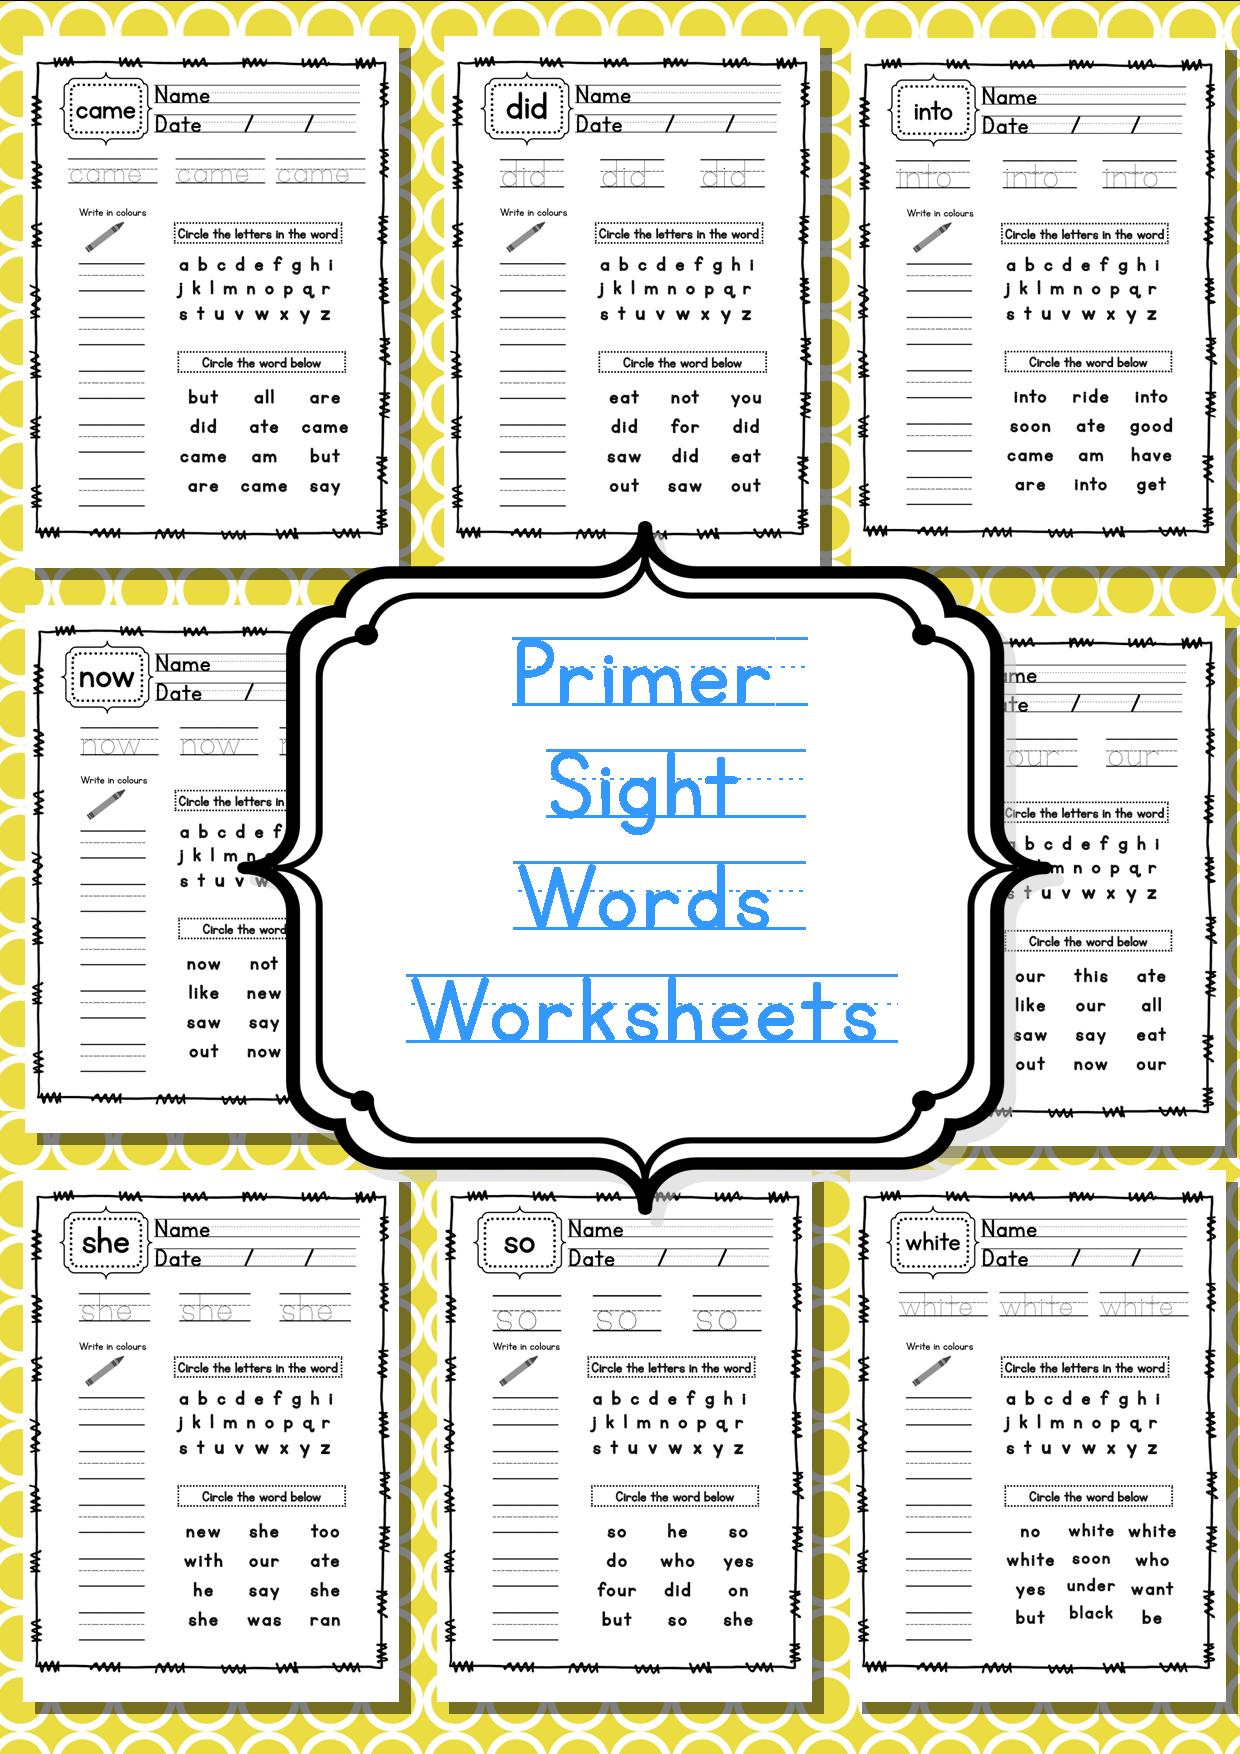 Primer Sight Word Worksheets | Teaching Resources Blog